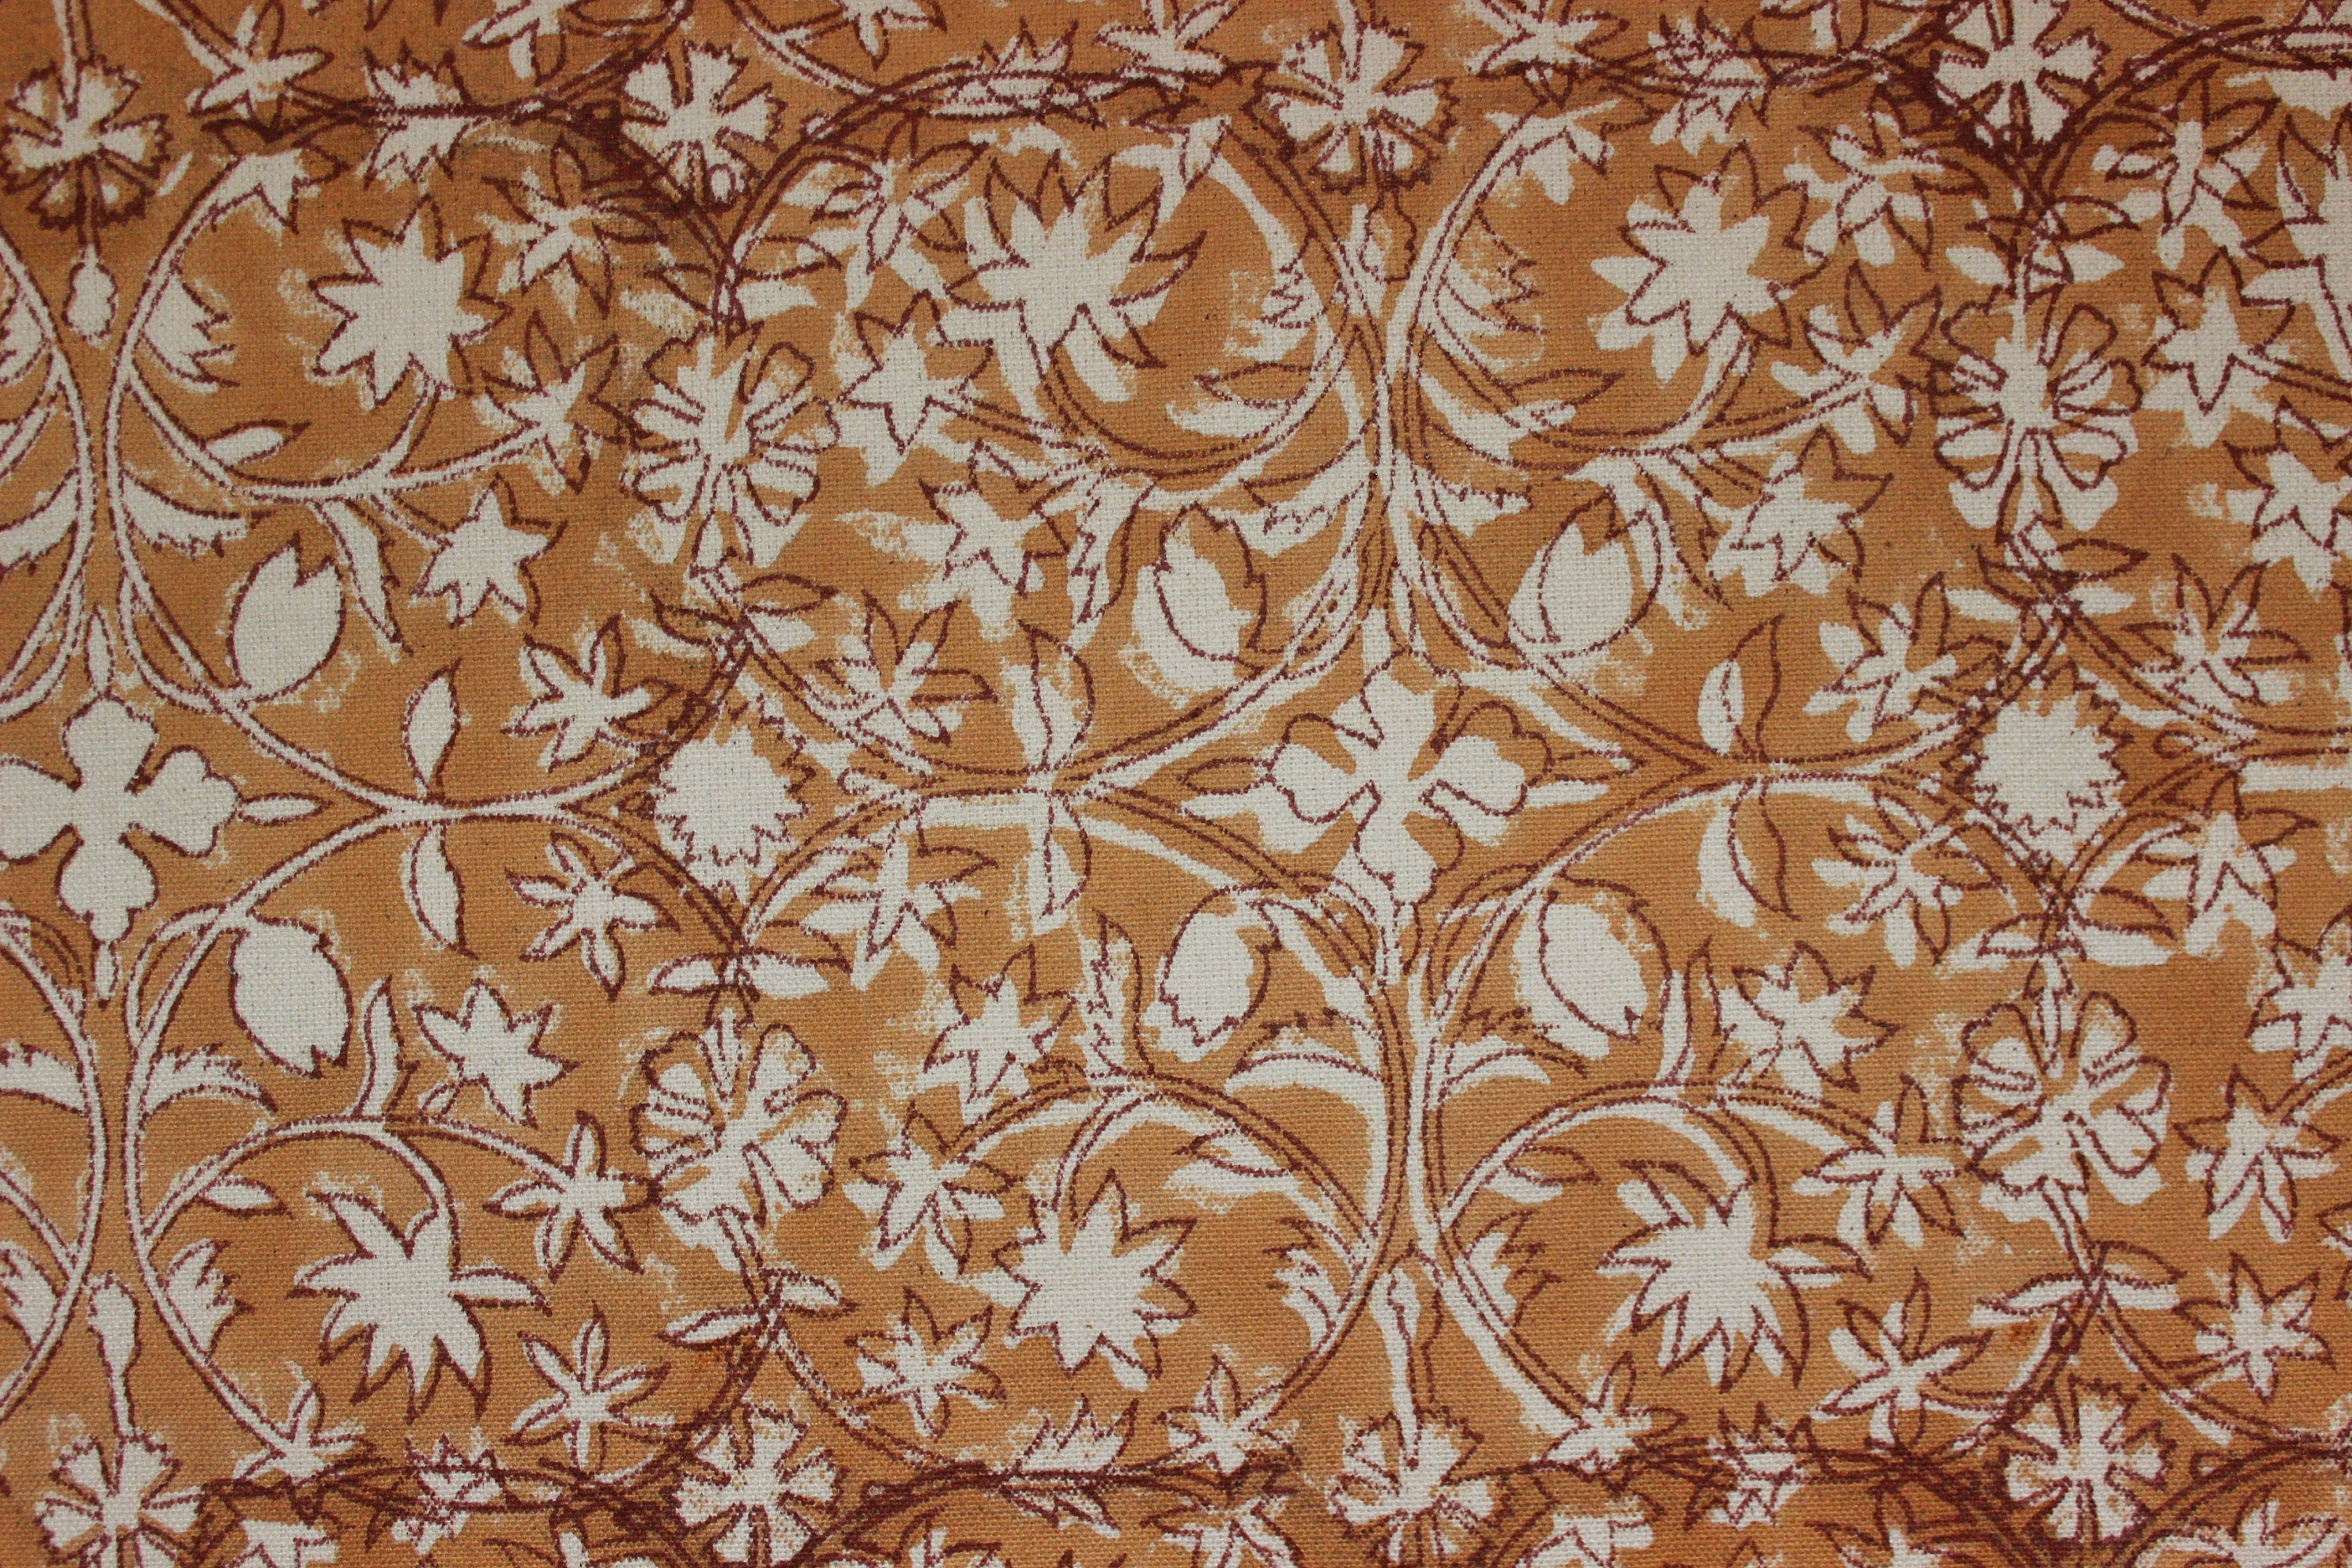 Block Print Linen Fabric, Marmalede  Hand Block Print Floral Fabric  Natural Linen & Cotton Fabrics From India  Designer Hand Blocked Fabric